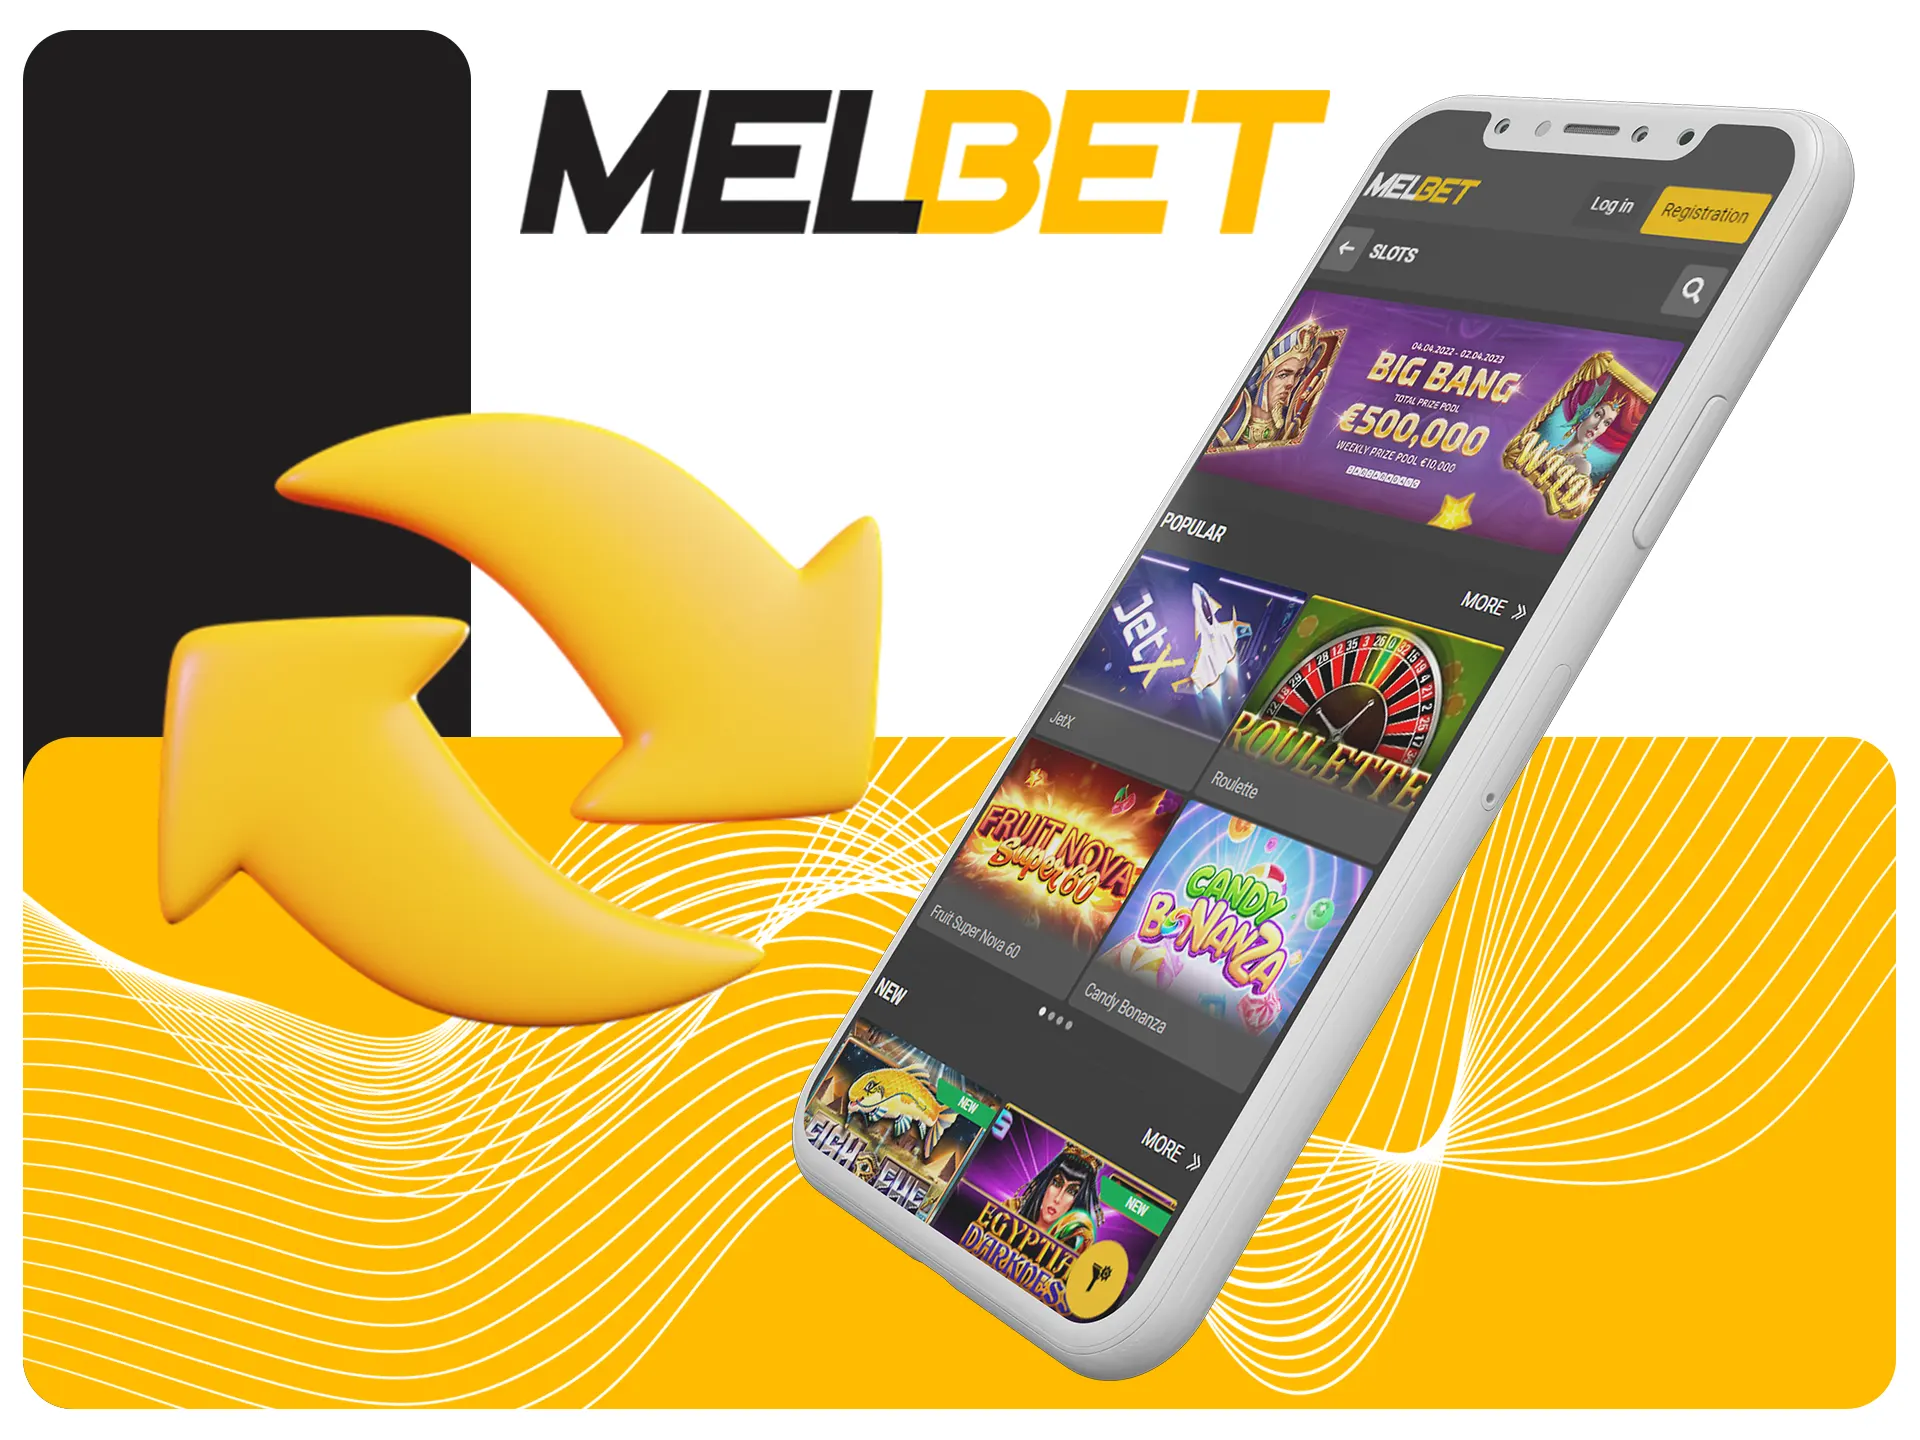 Melbet app updates automatically.